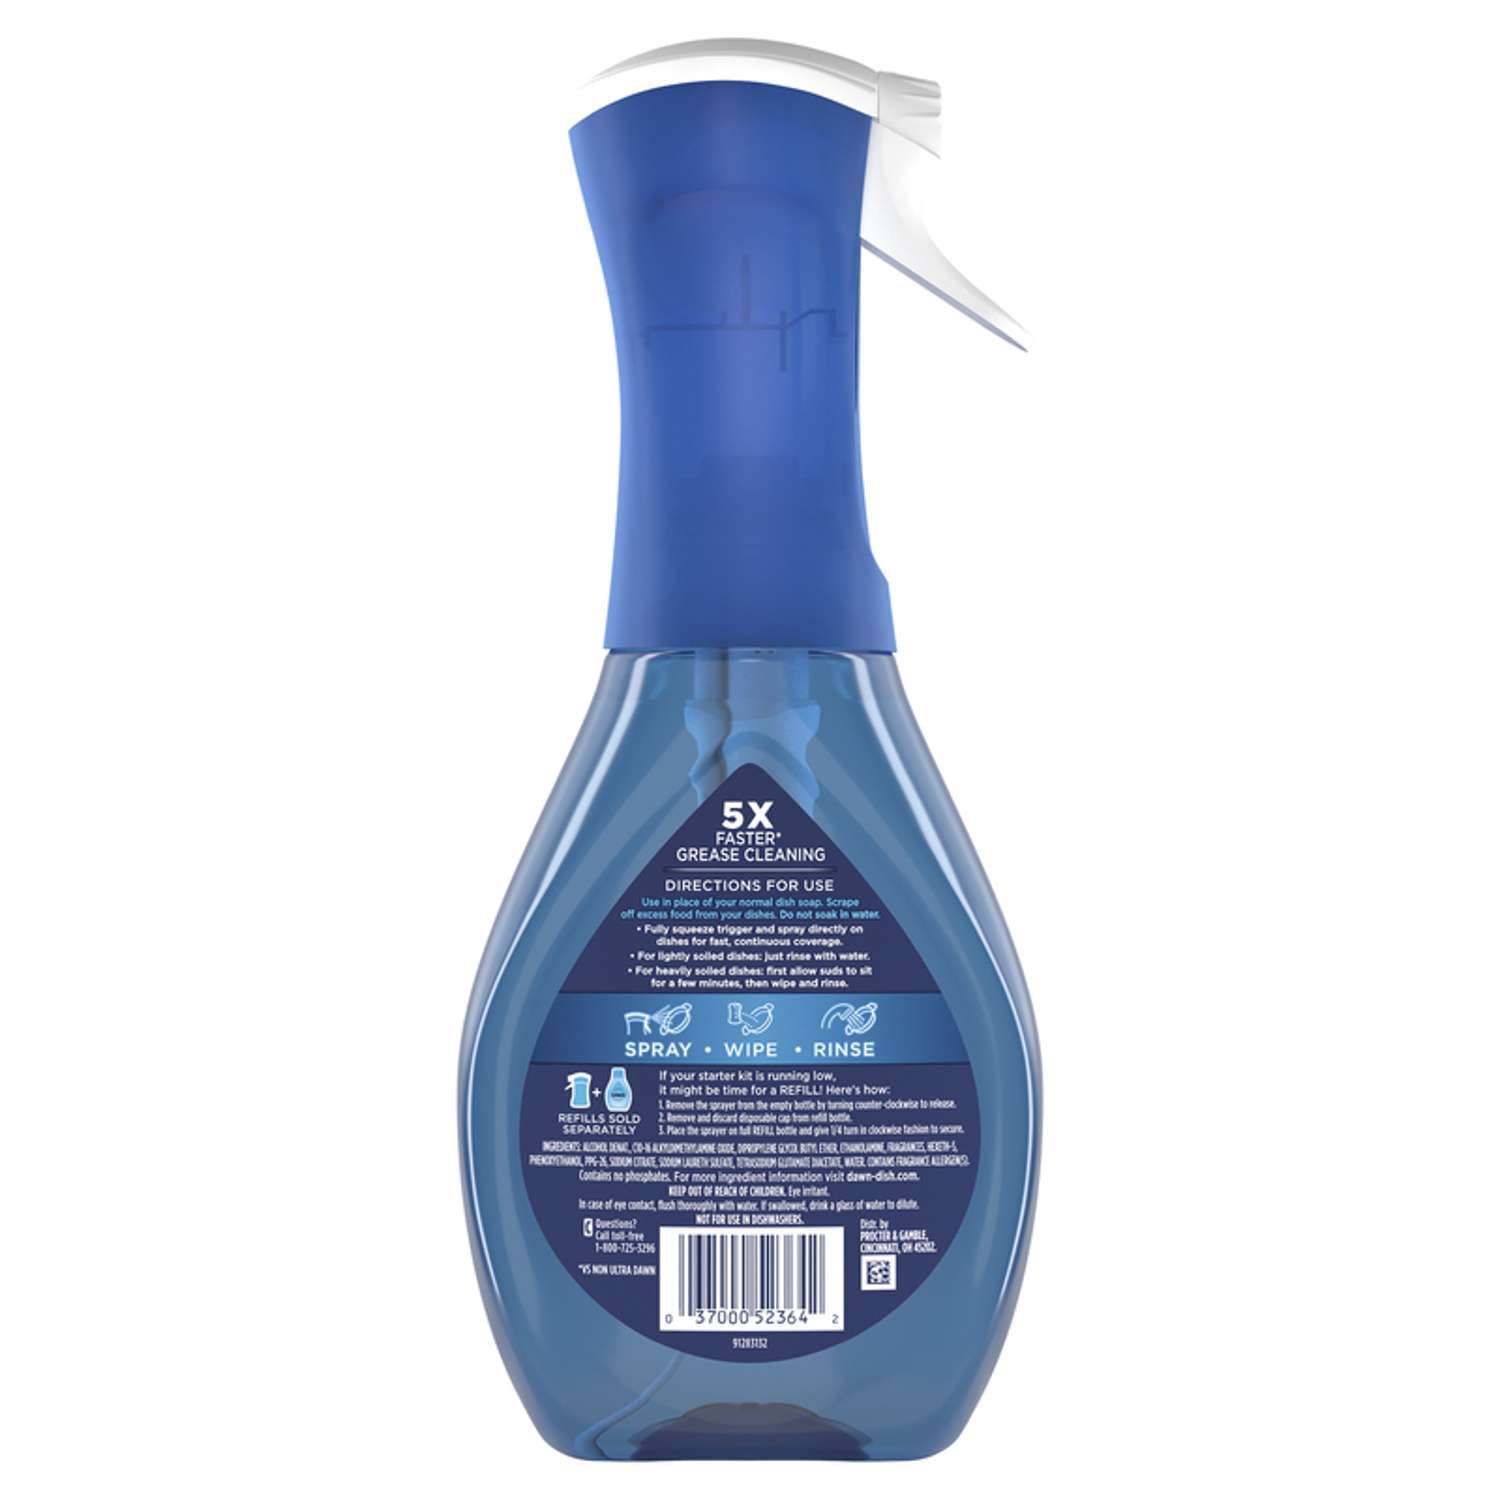 Dawn Ultra Cleaning Kit, Hydration Bottle